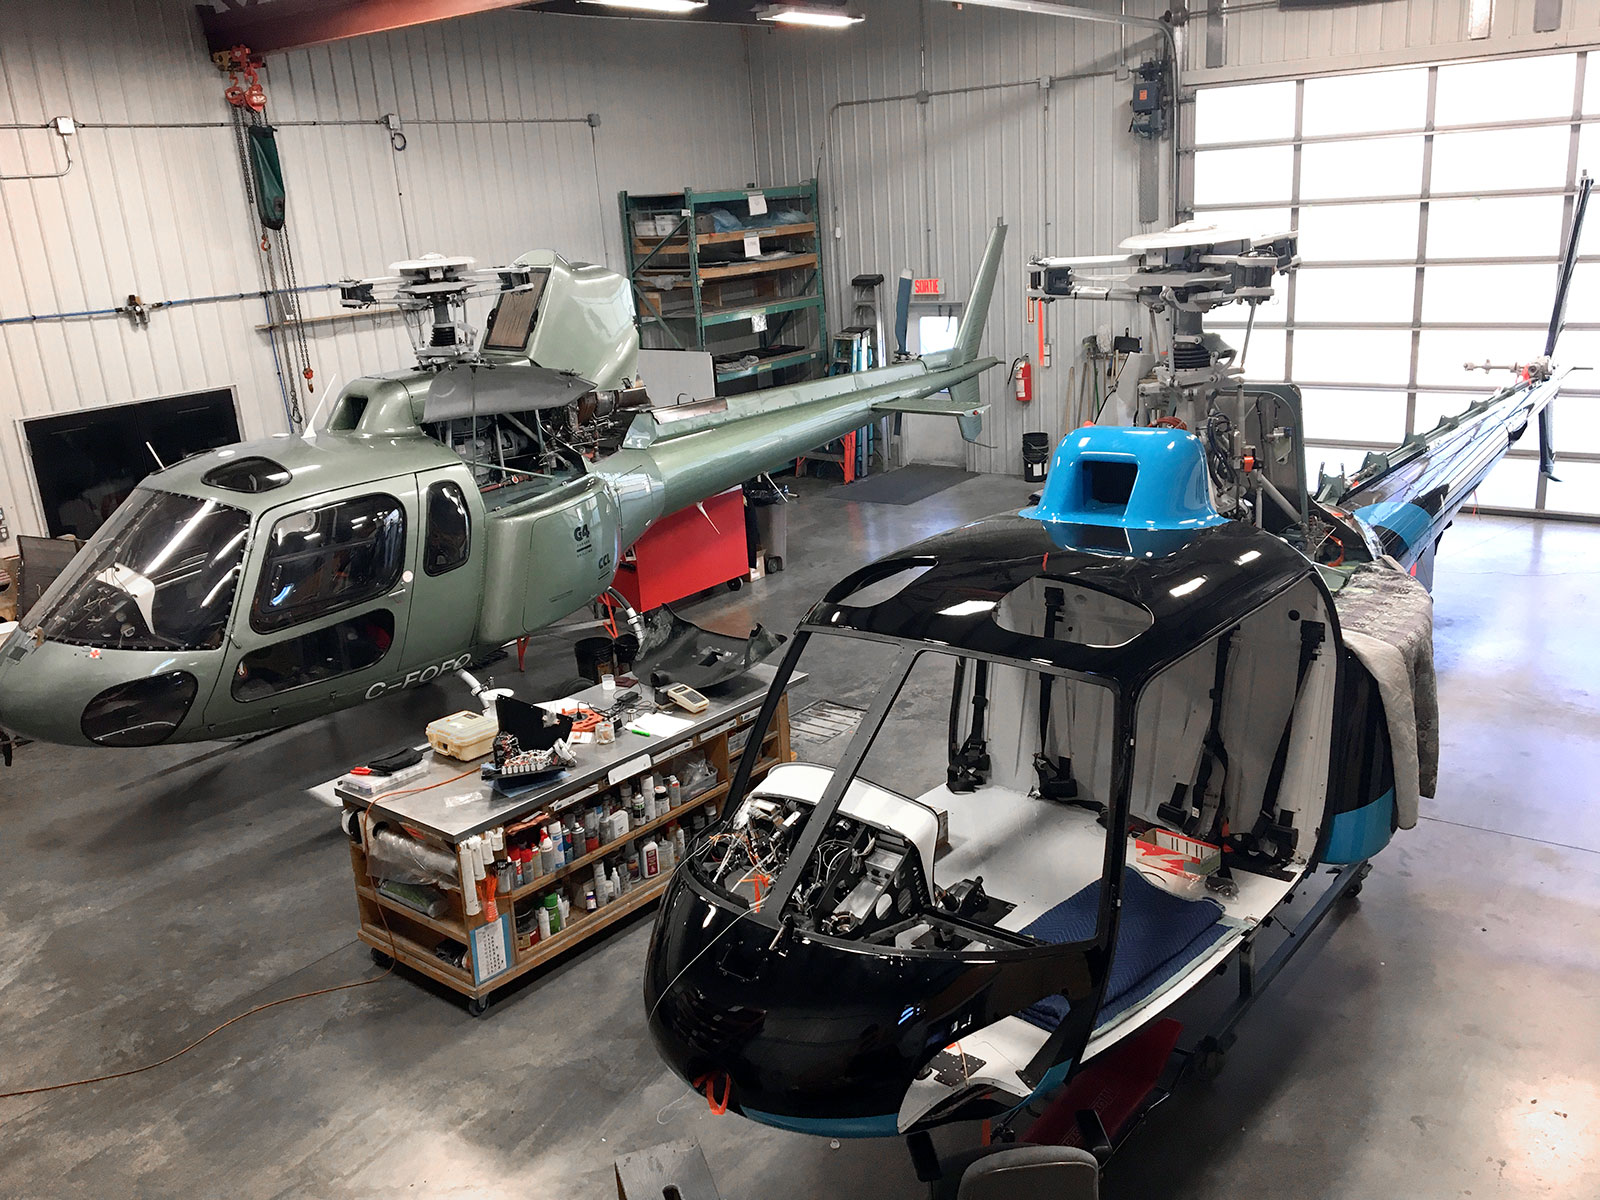 Garage hélicoptère - Heli technik